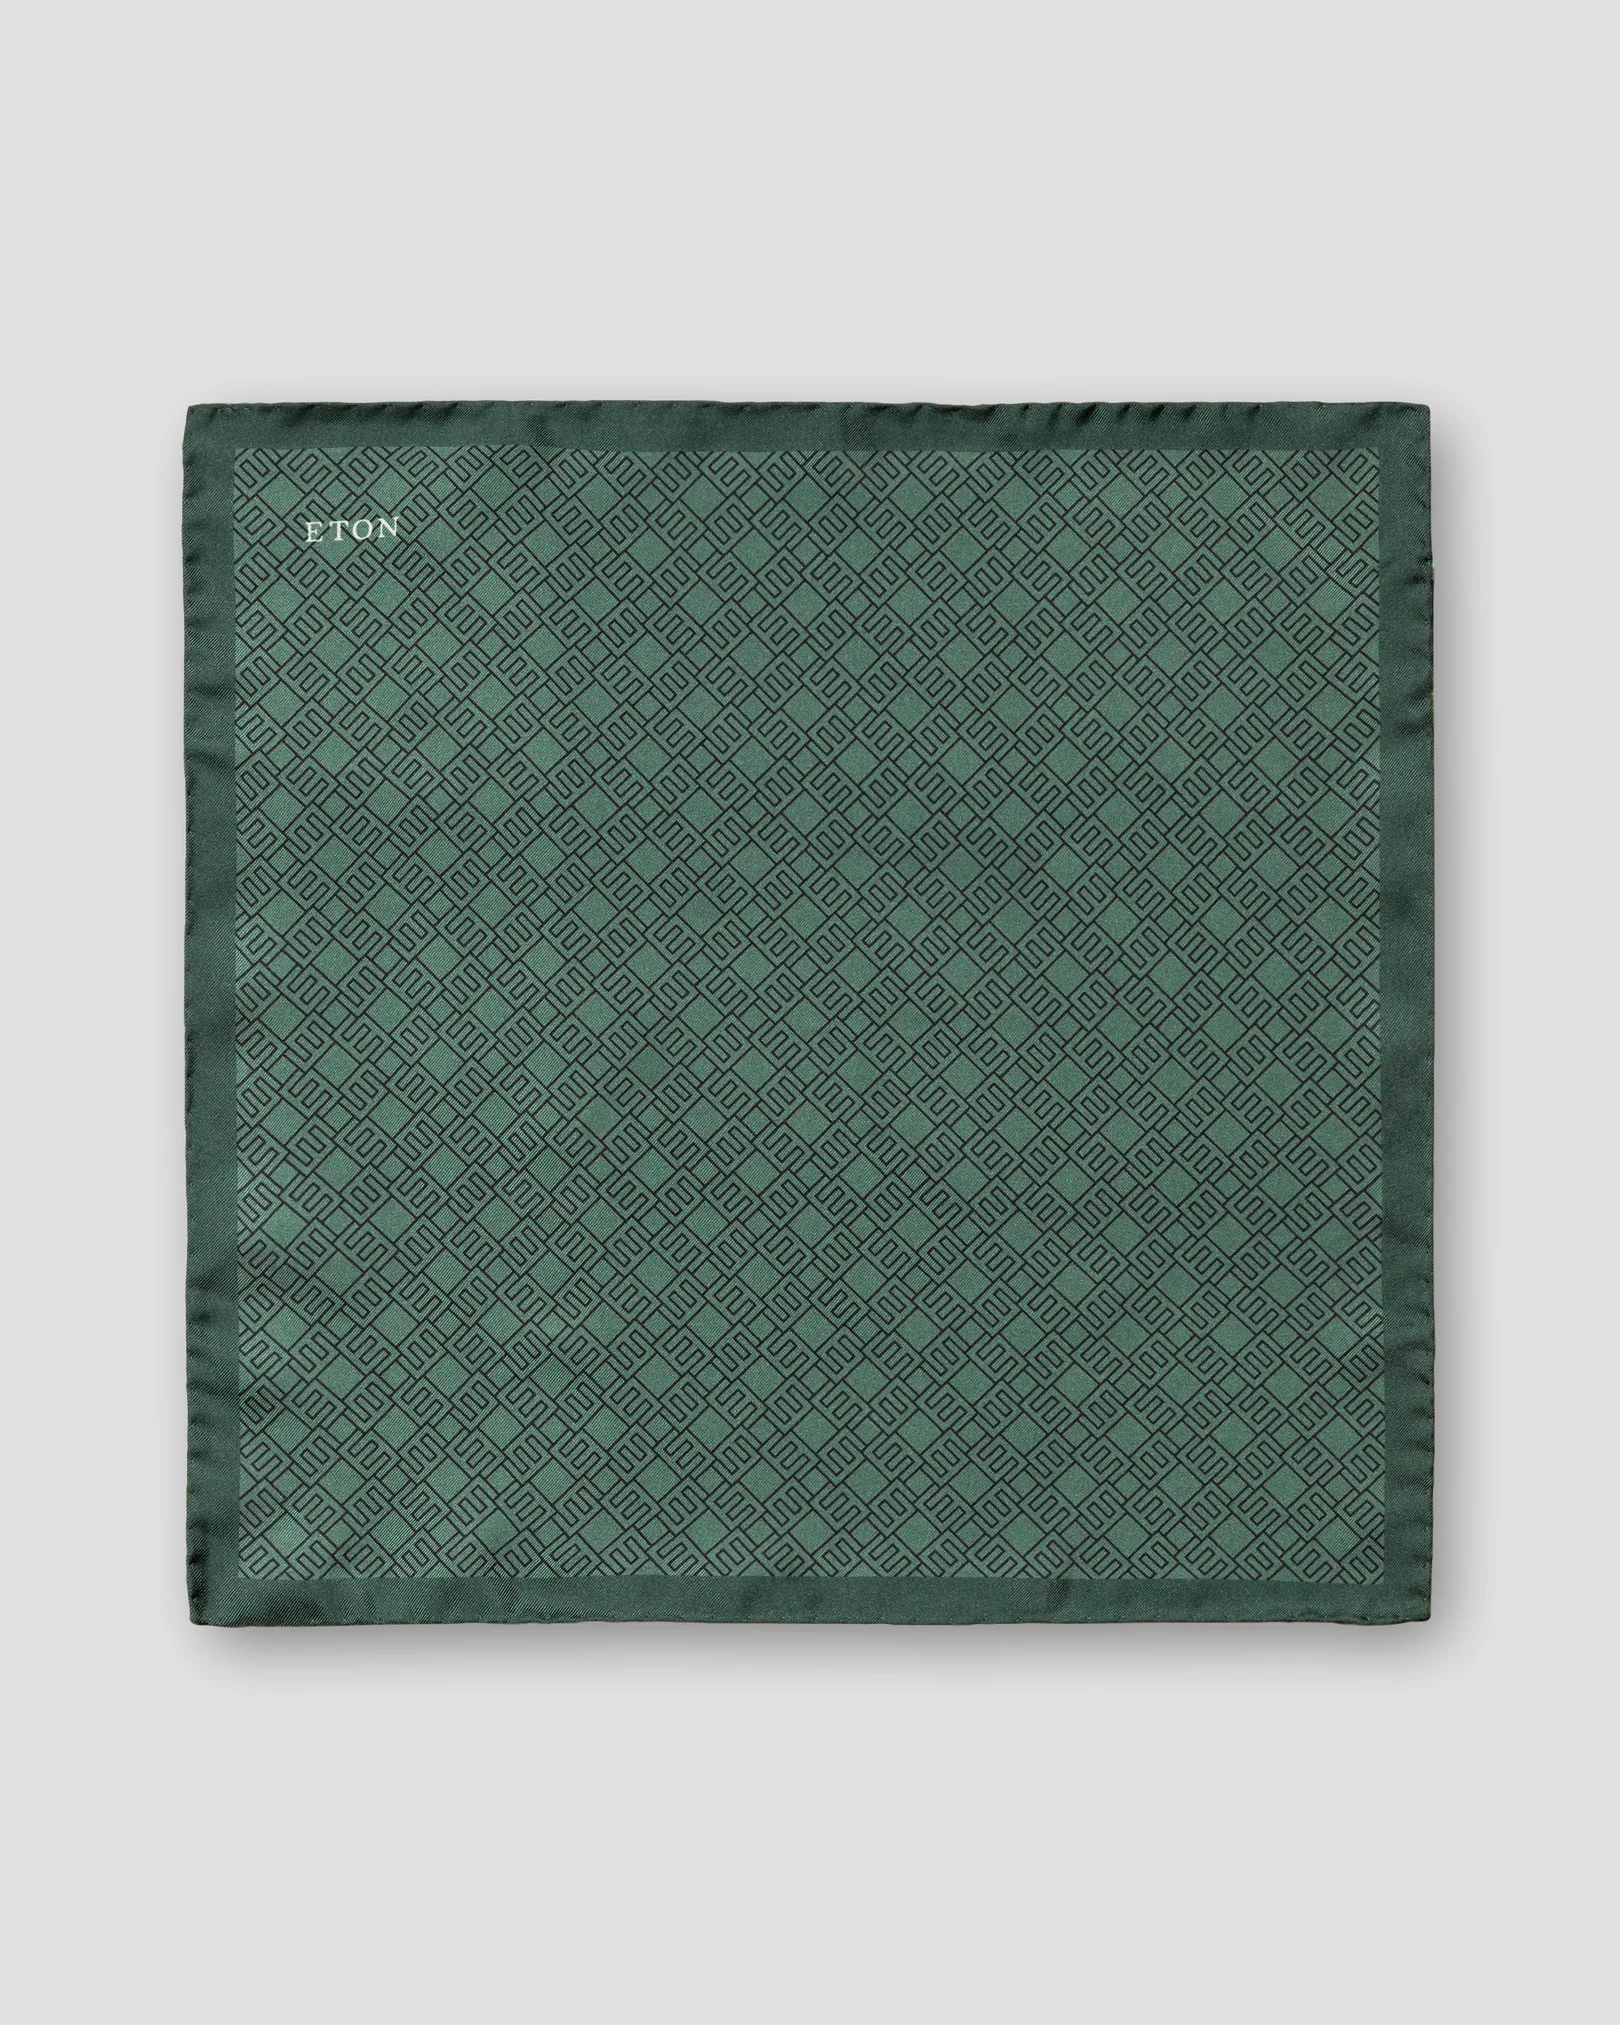 Eton - dark green vintage pocket square